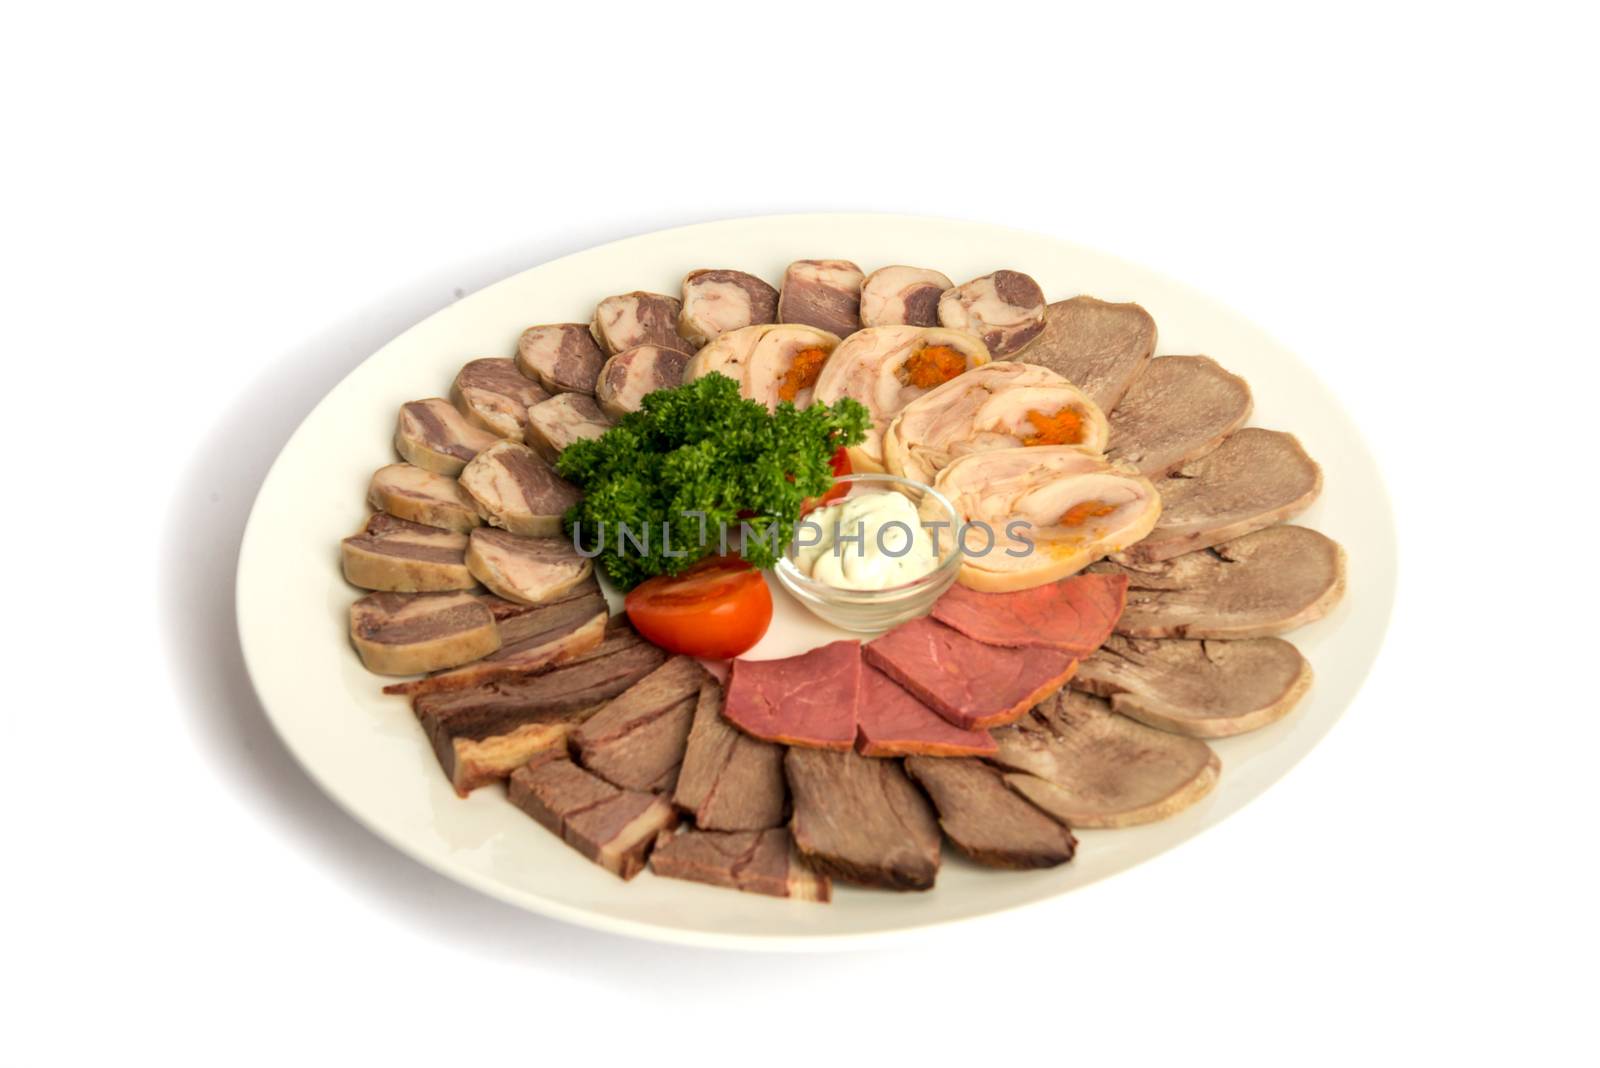 Kazy - Traditional Sausage-like food made from Horseflesh by krknvkz